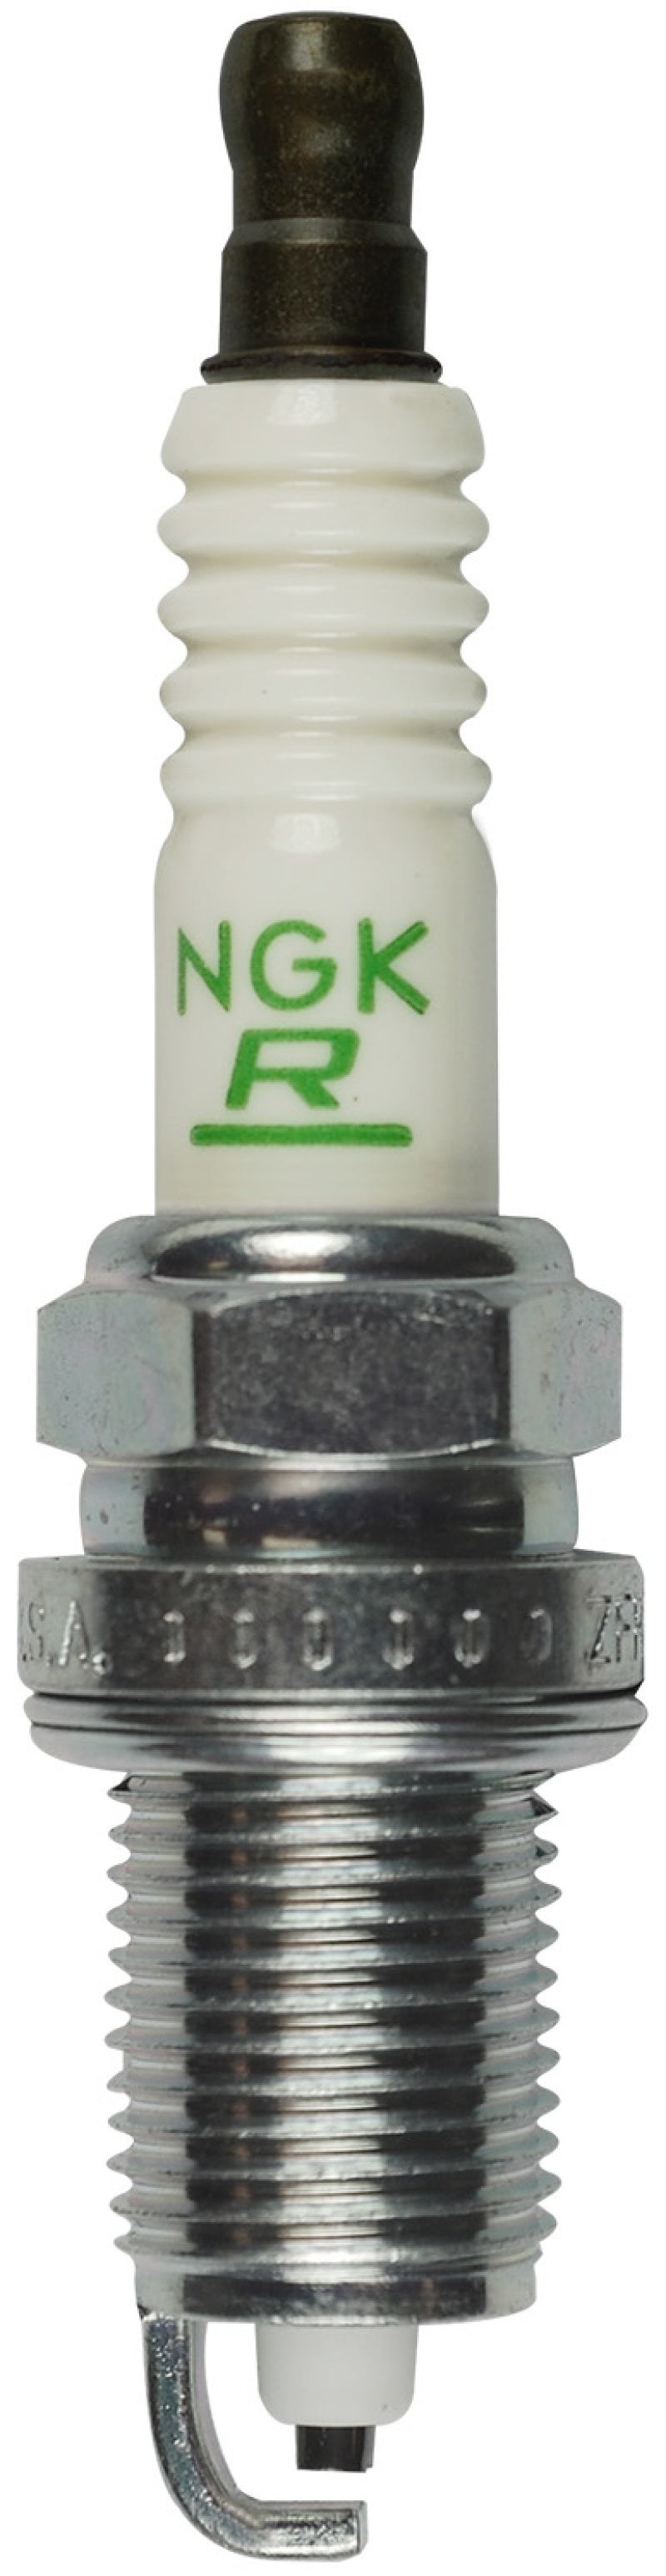 NGK Nickel Spark Plug Box of 4 (ZFR5F-11).